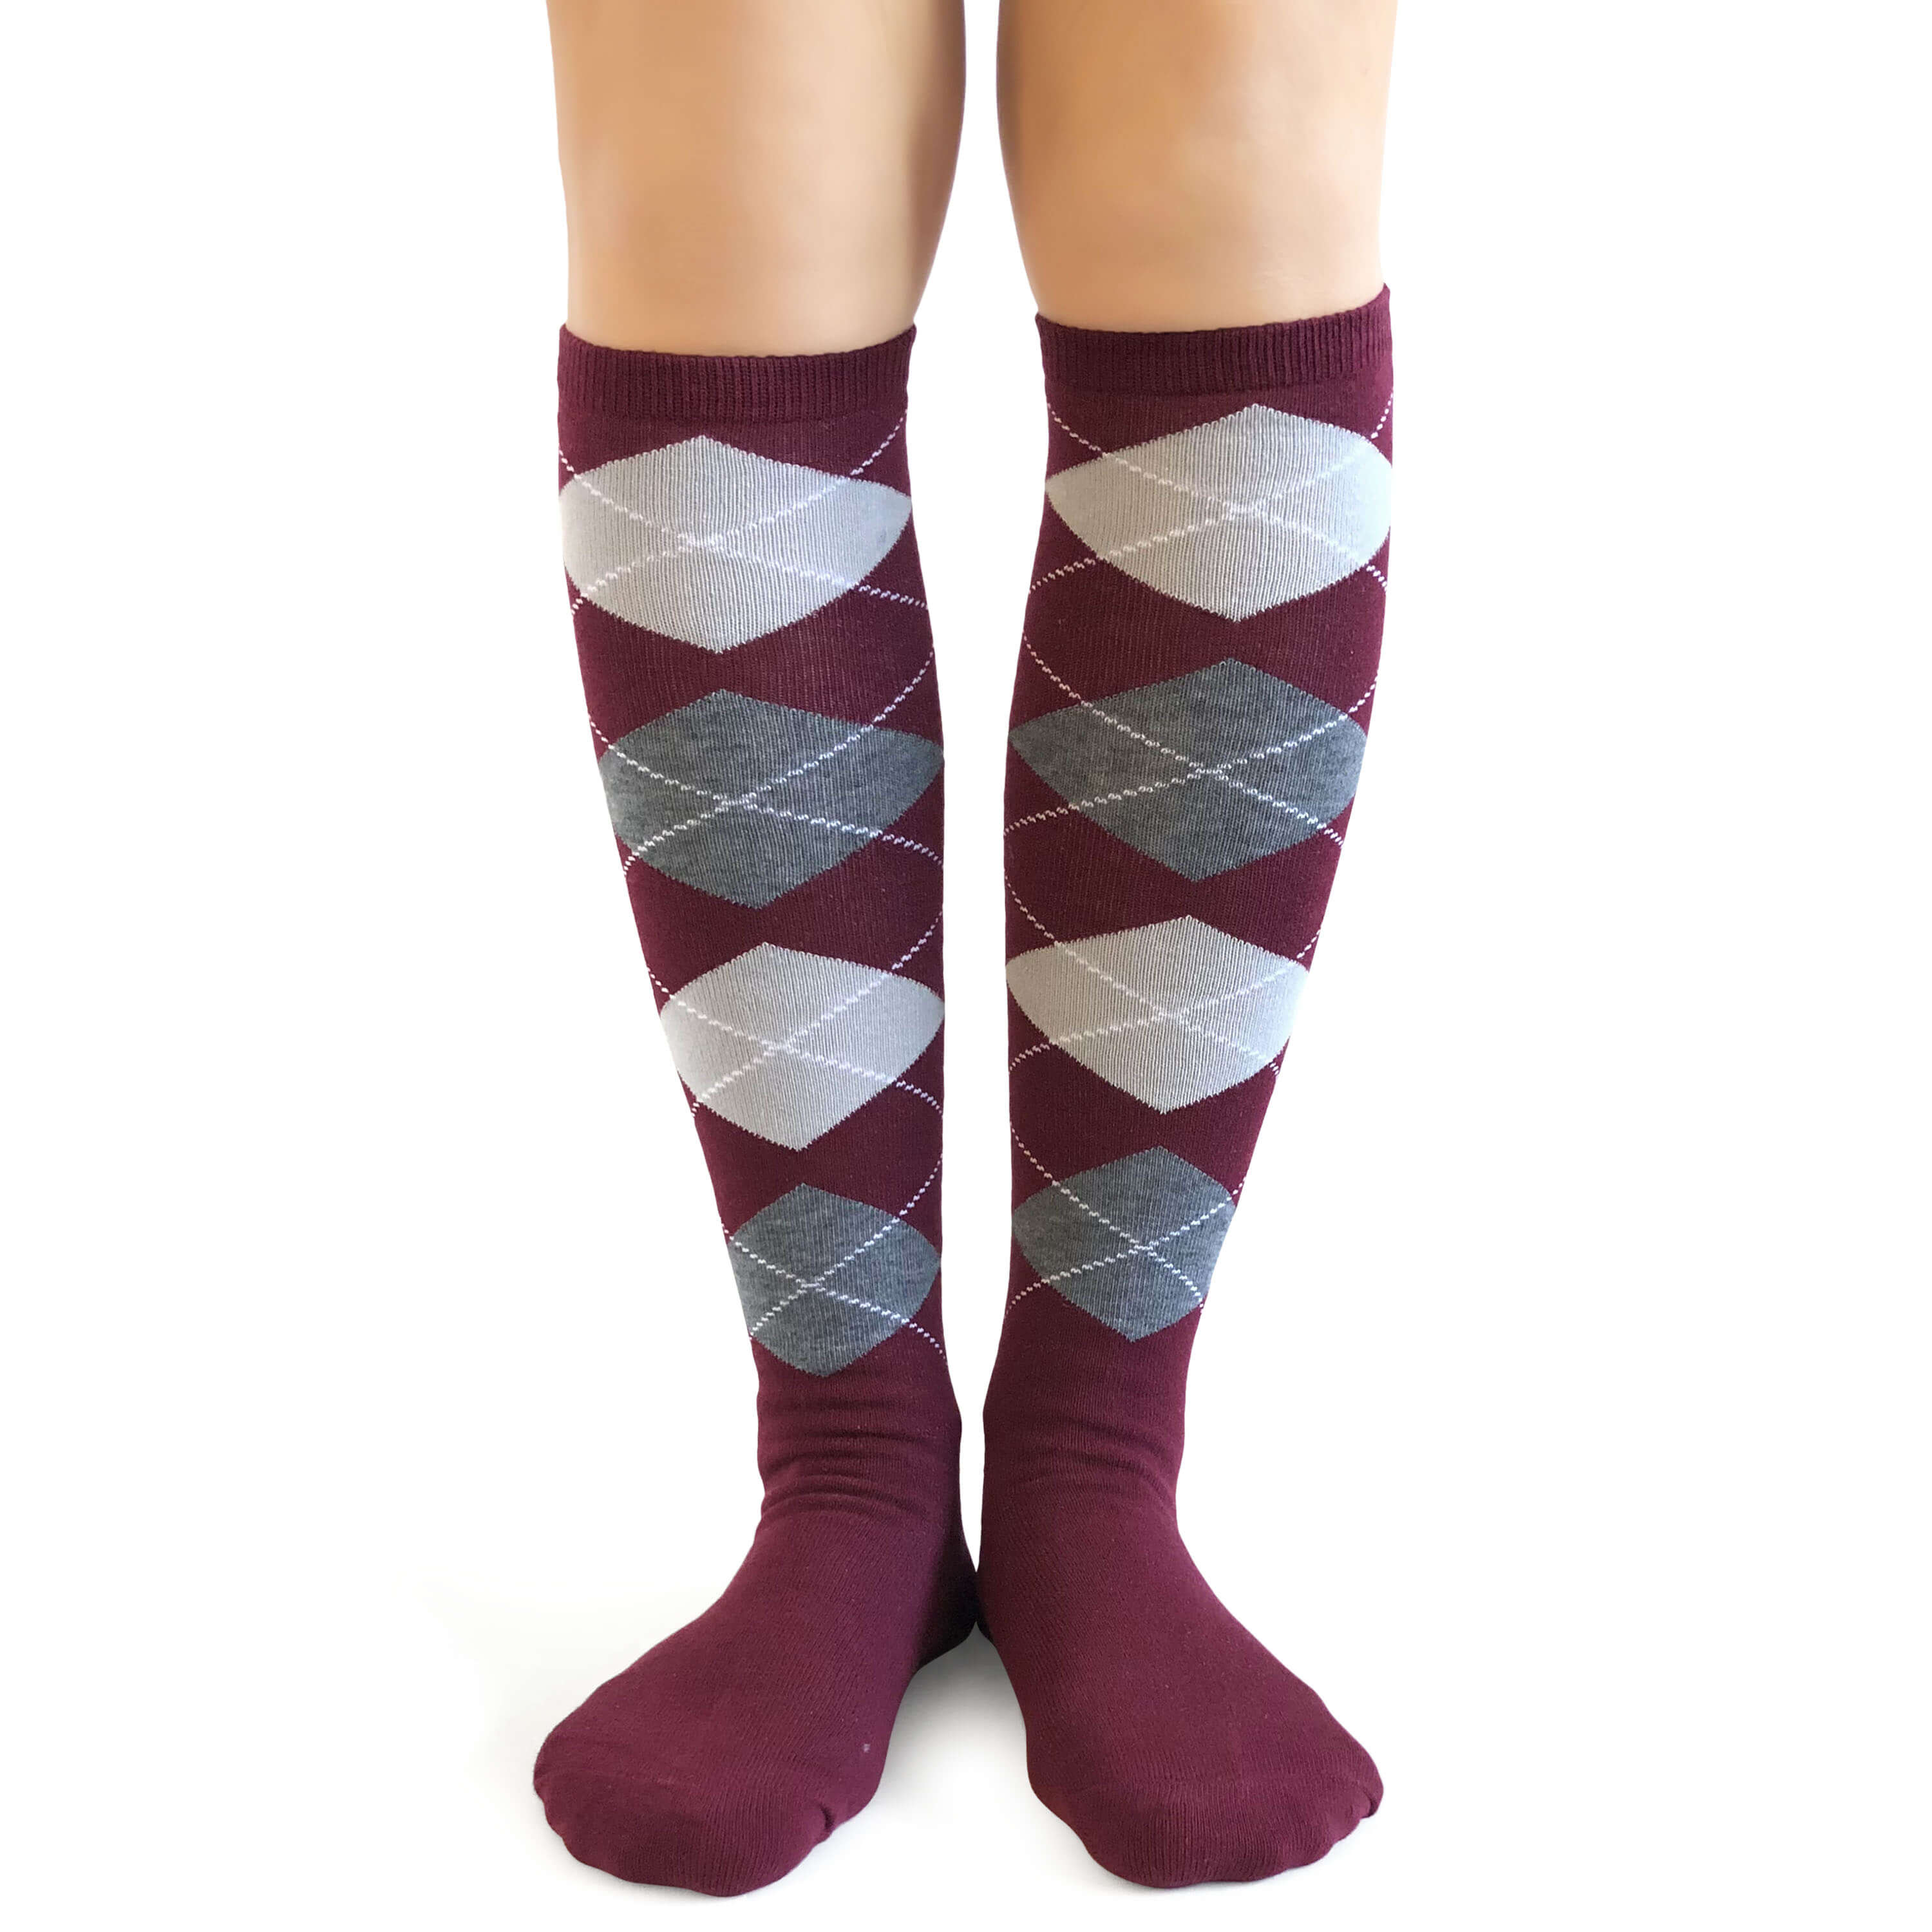 Maroon/Burgundy Light & Heather Gray Argyle Knee High Socks